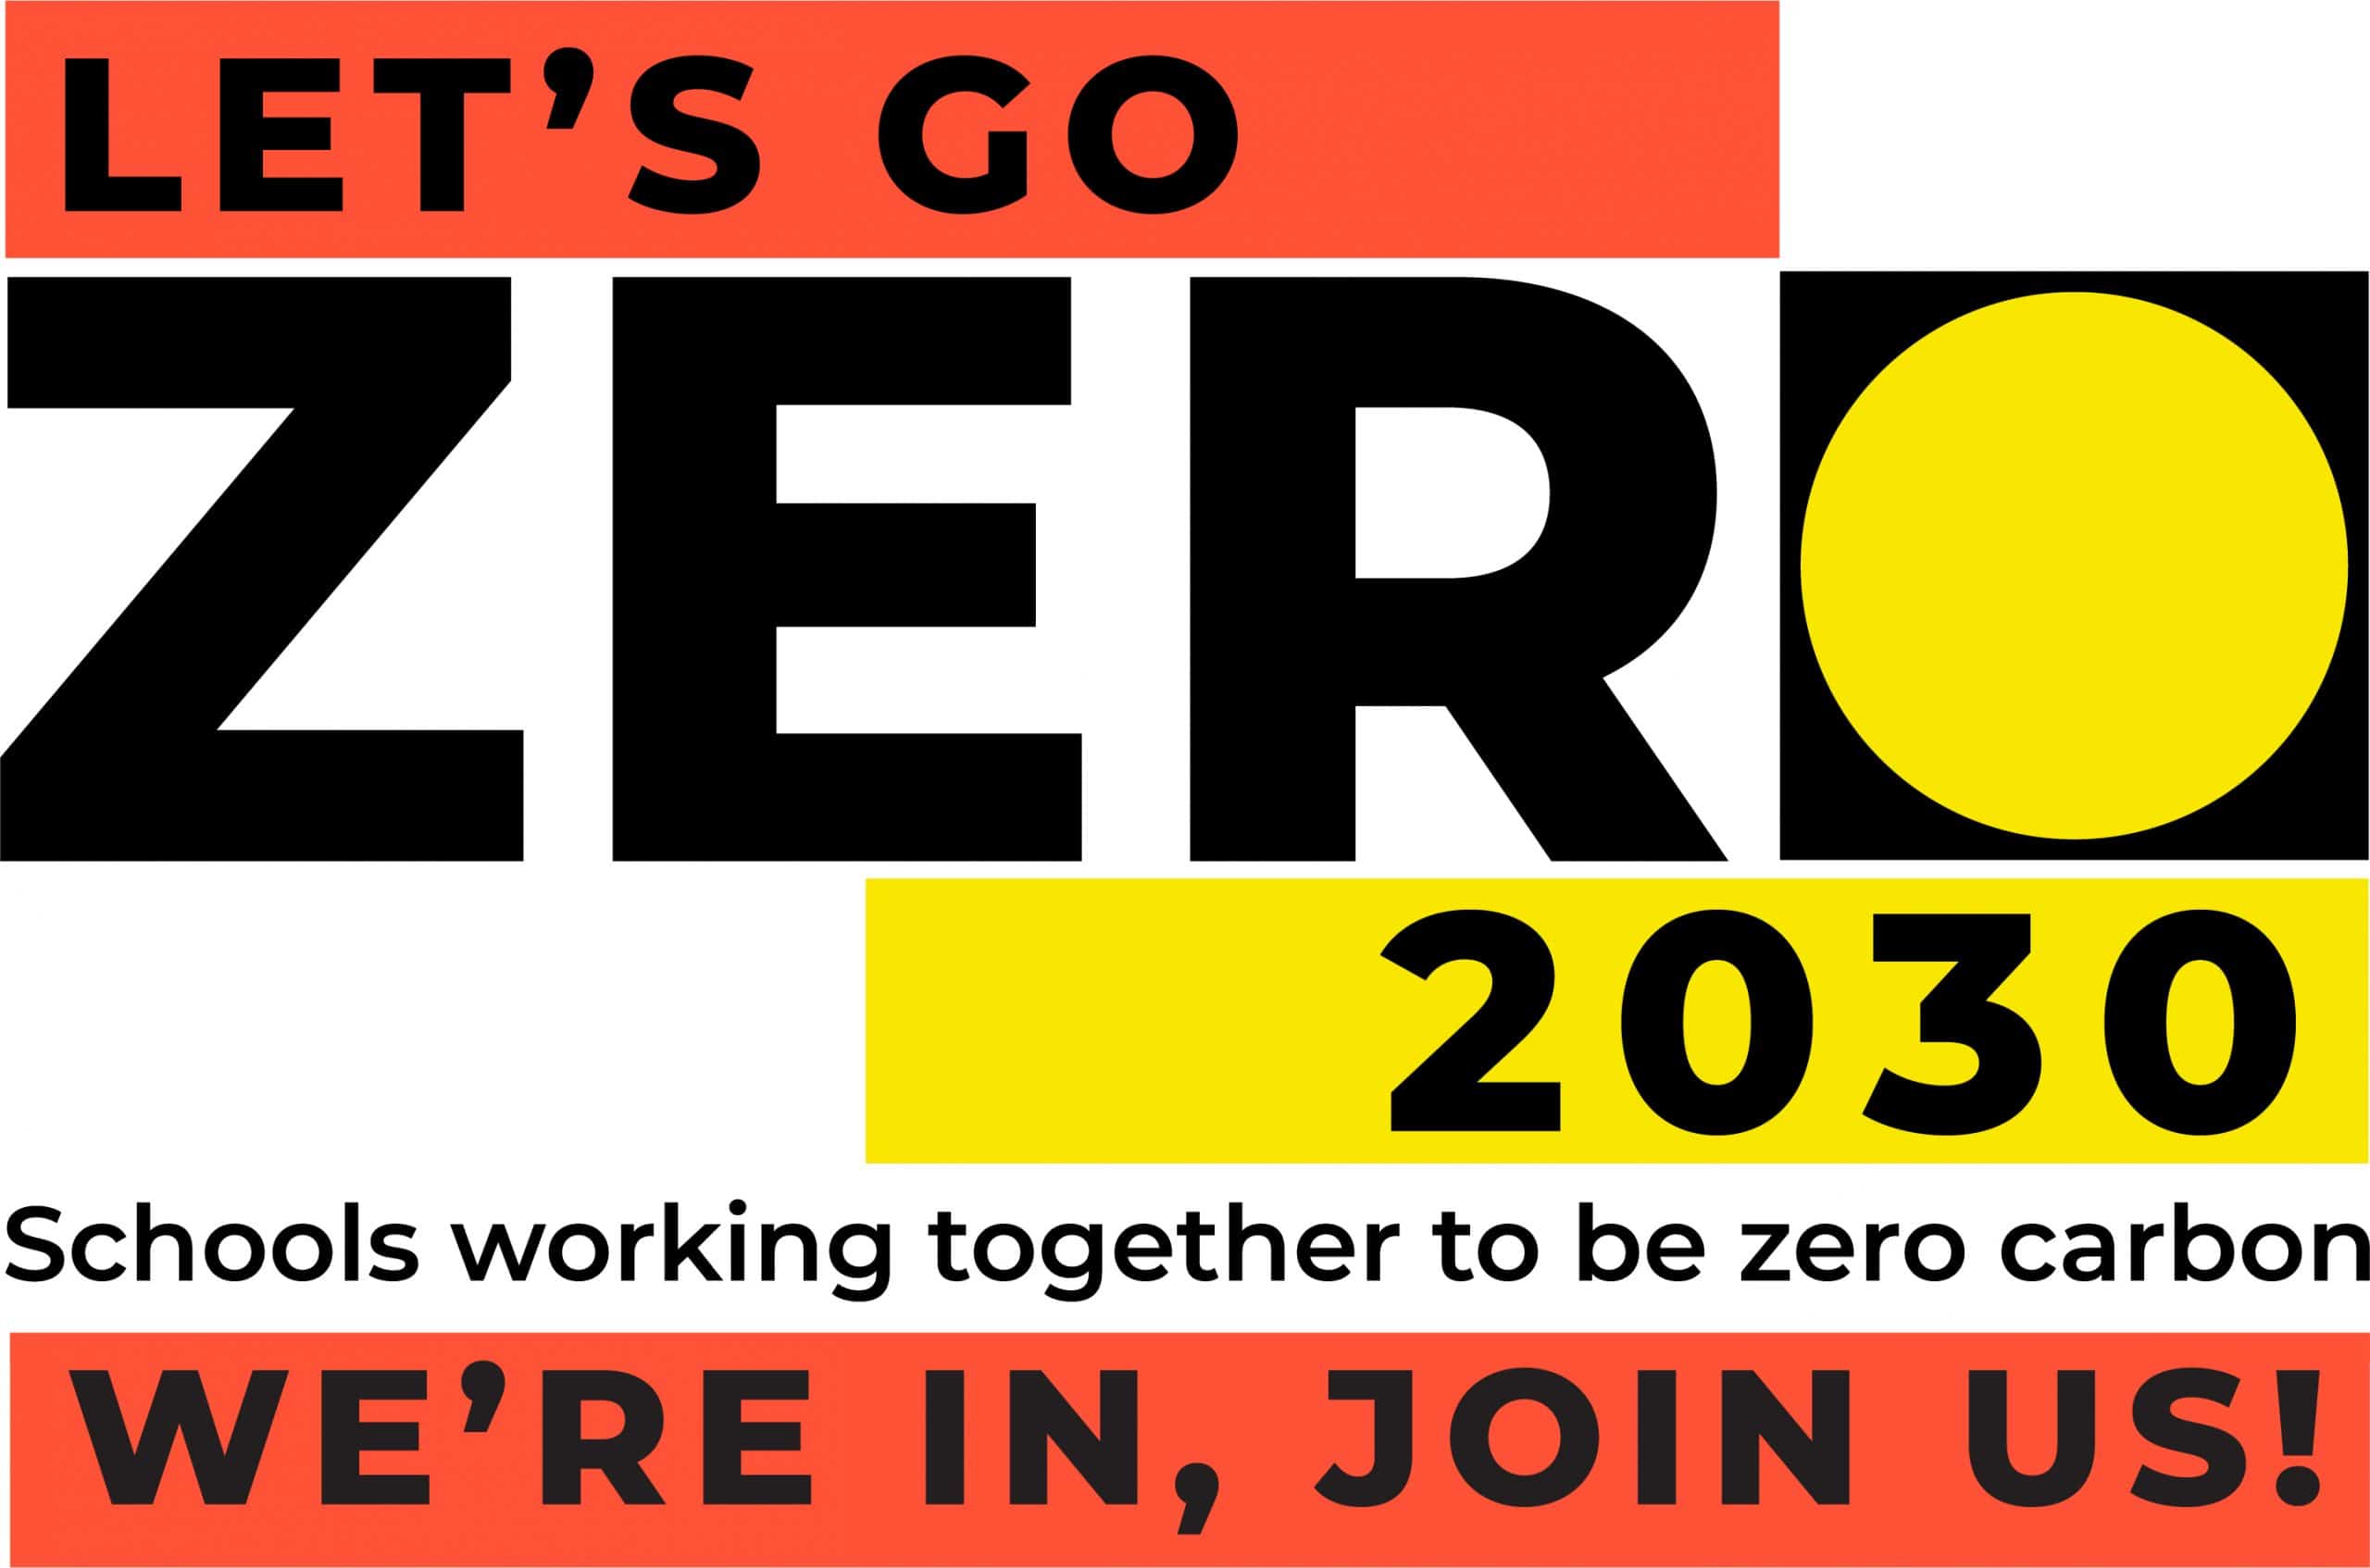 We’ve taken the zero carbon pledge.